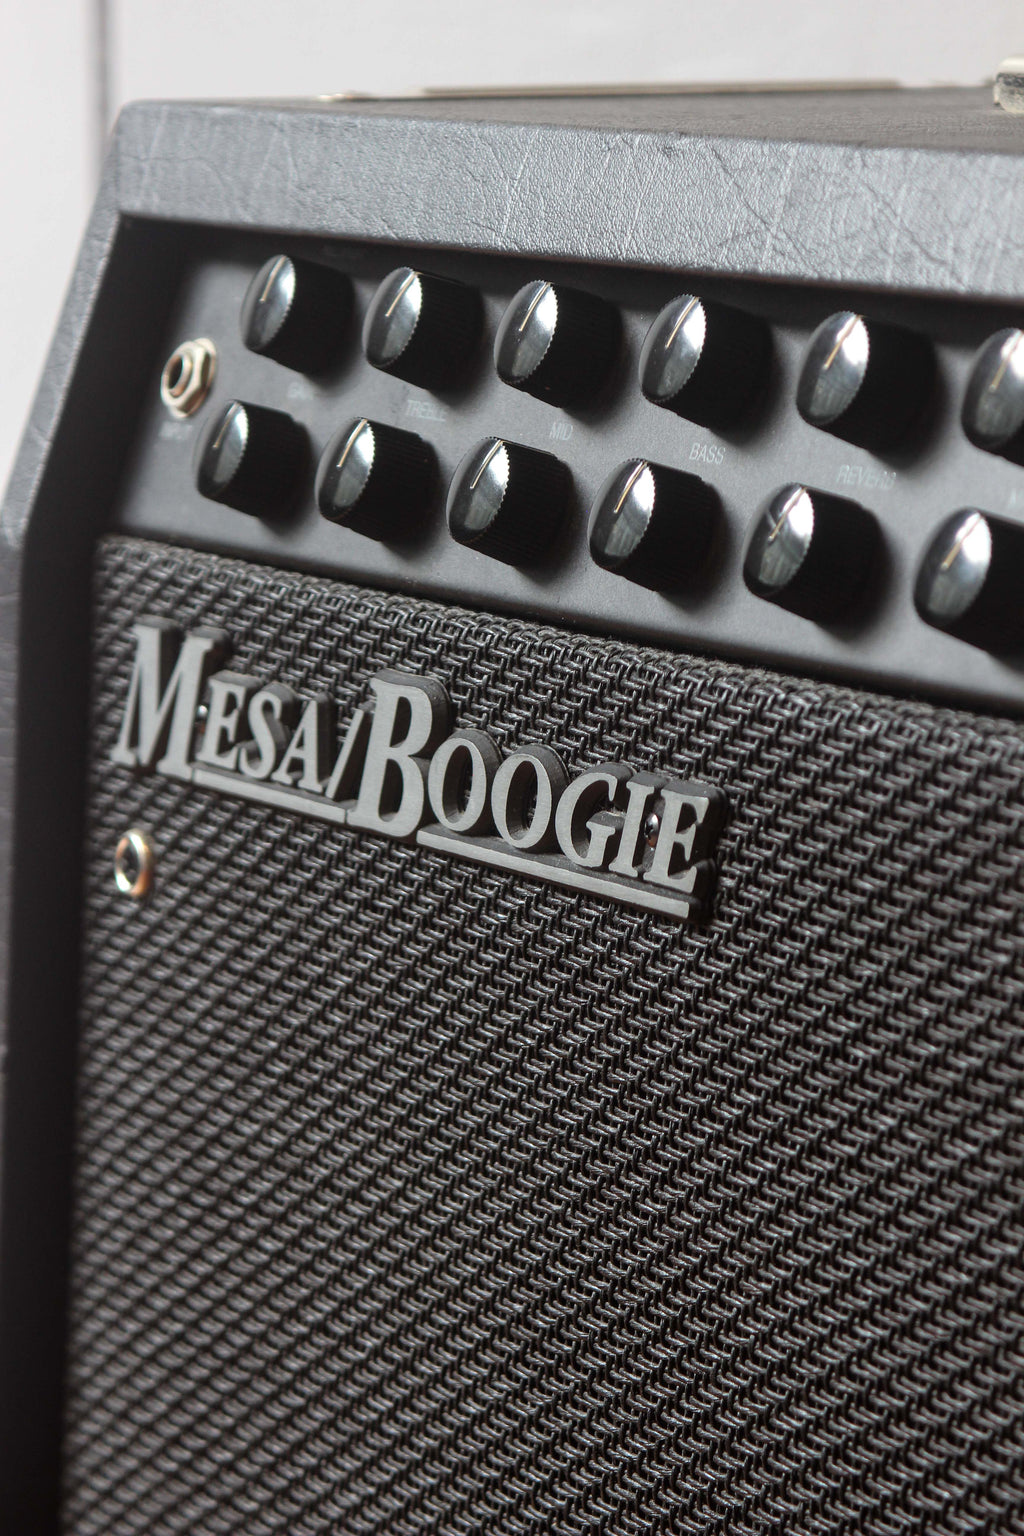 Mesa Boogie F-50 1x12" Combo Amp